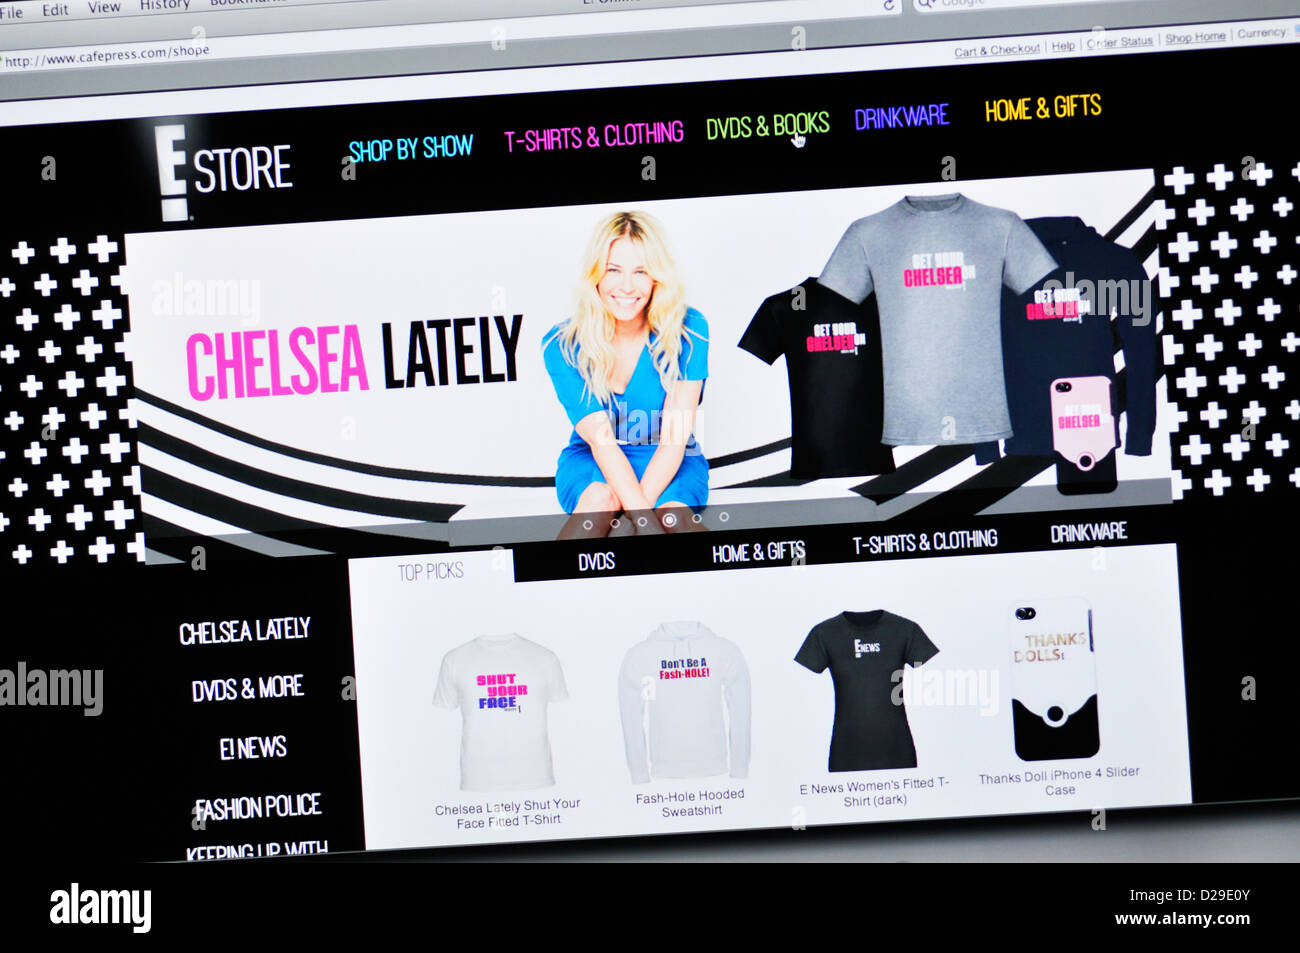 Cafepress website - online customized product shopping Stock Photo